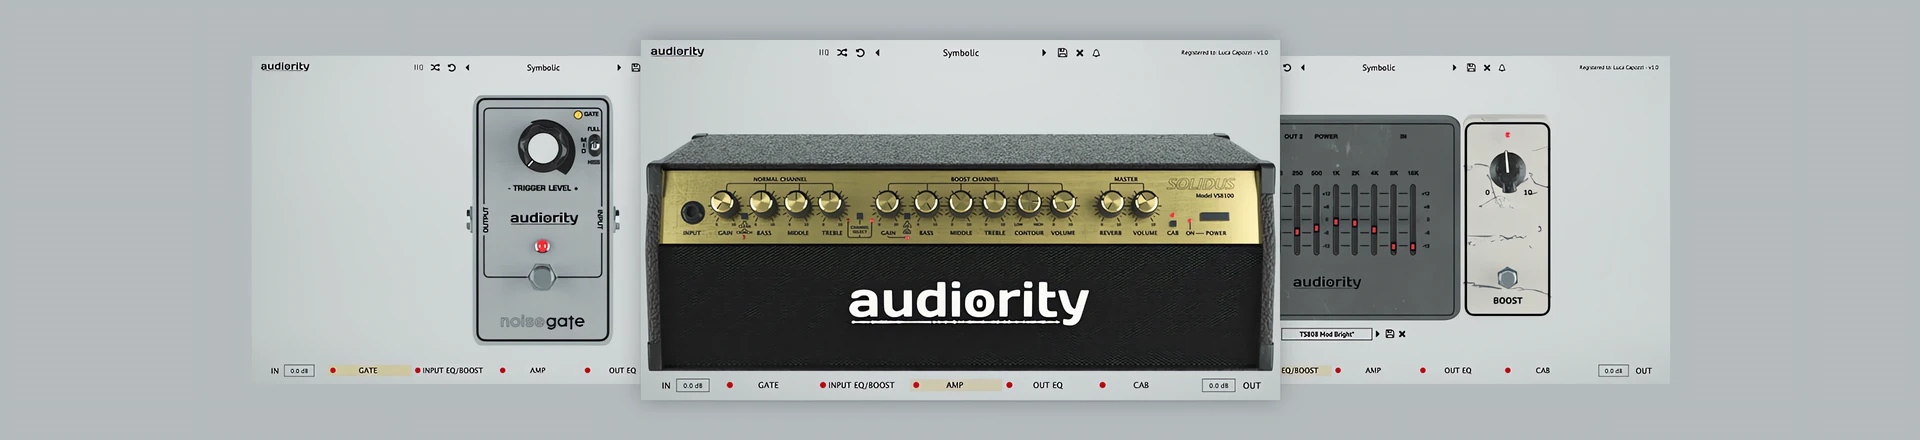 Audiority Solidus VS8100 - cyfrowy must have dla fanów Death! 